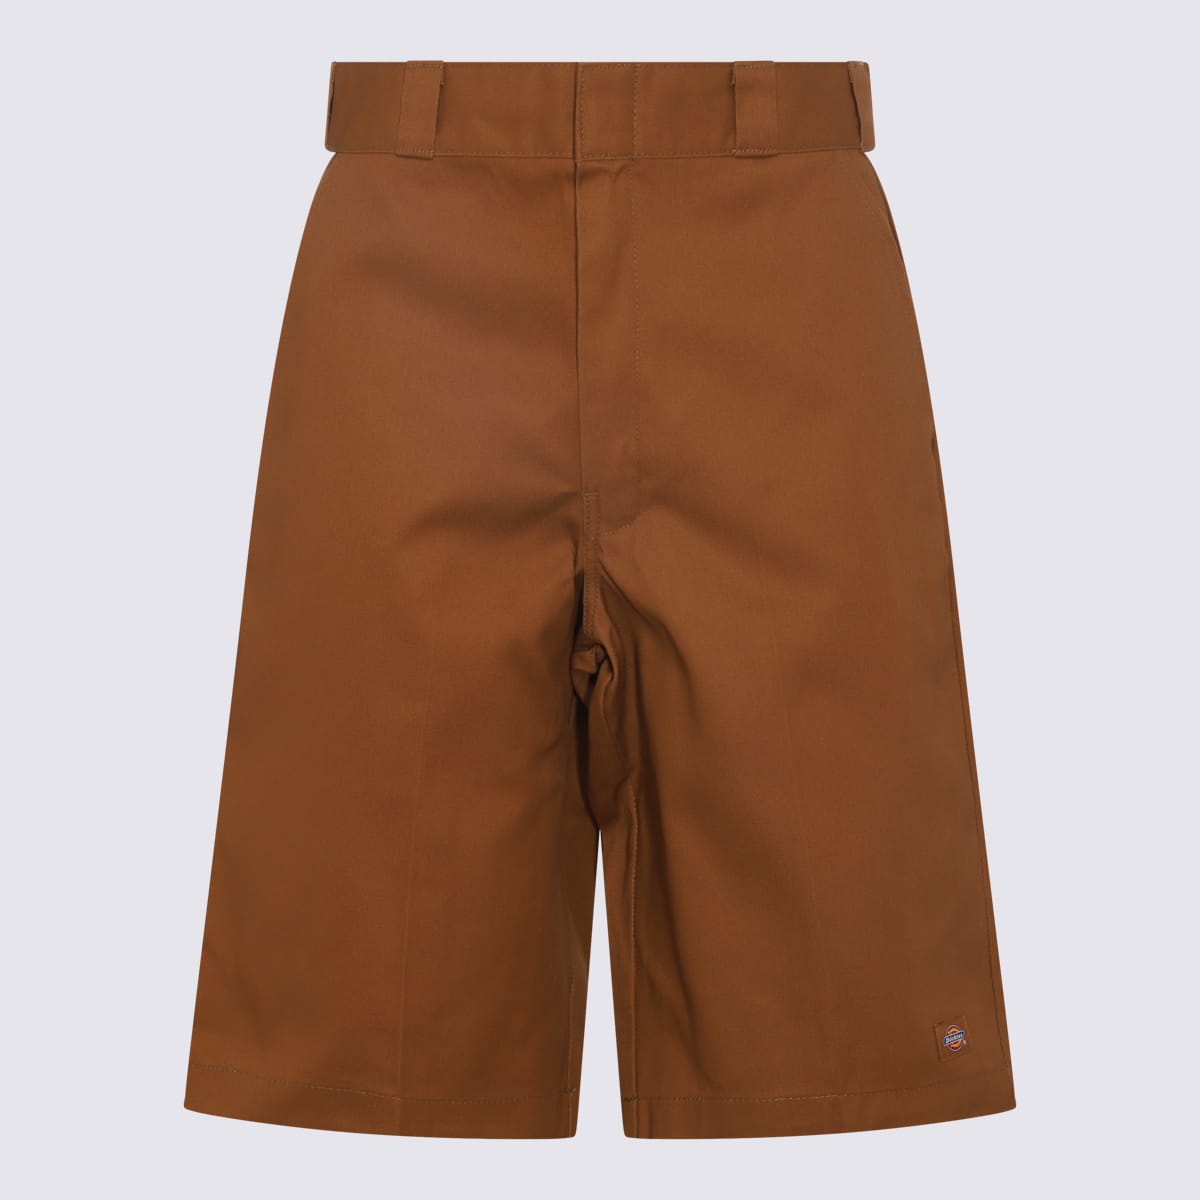 Shop Dickies Brown Cotton Blend Shorts